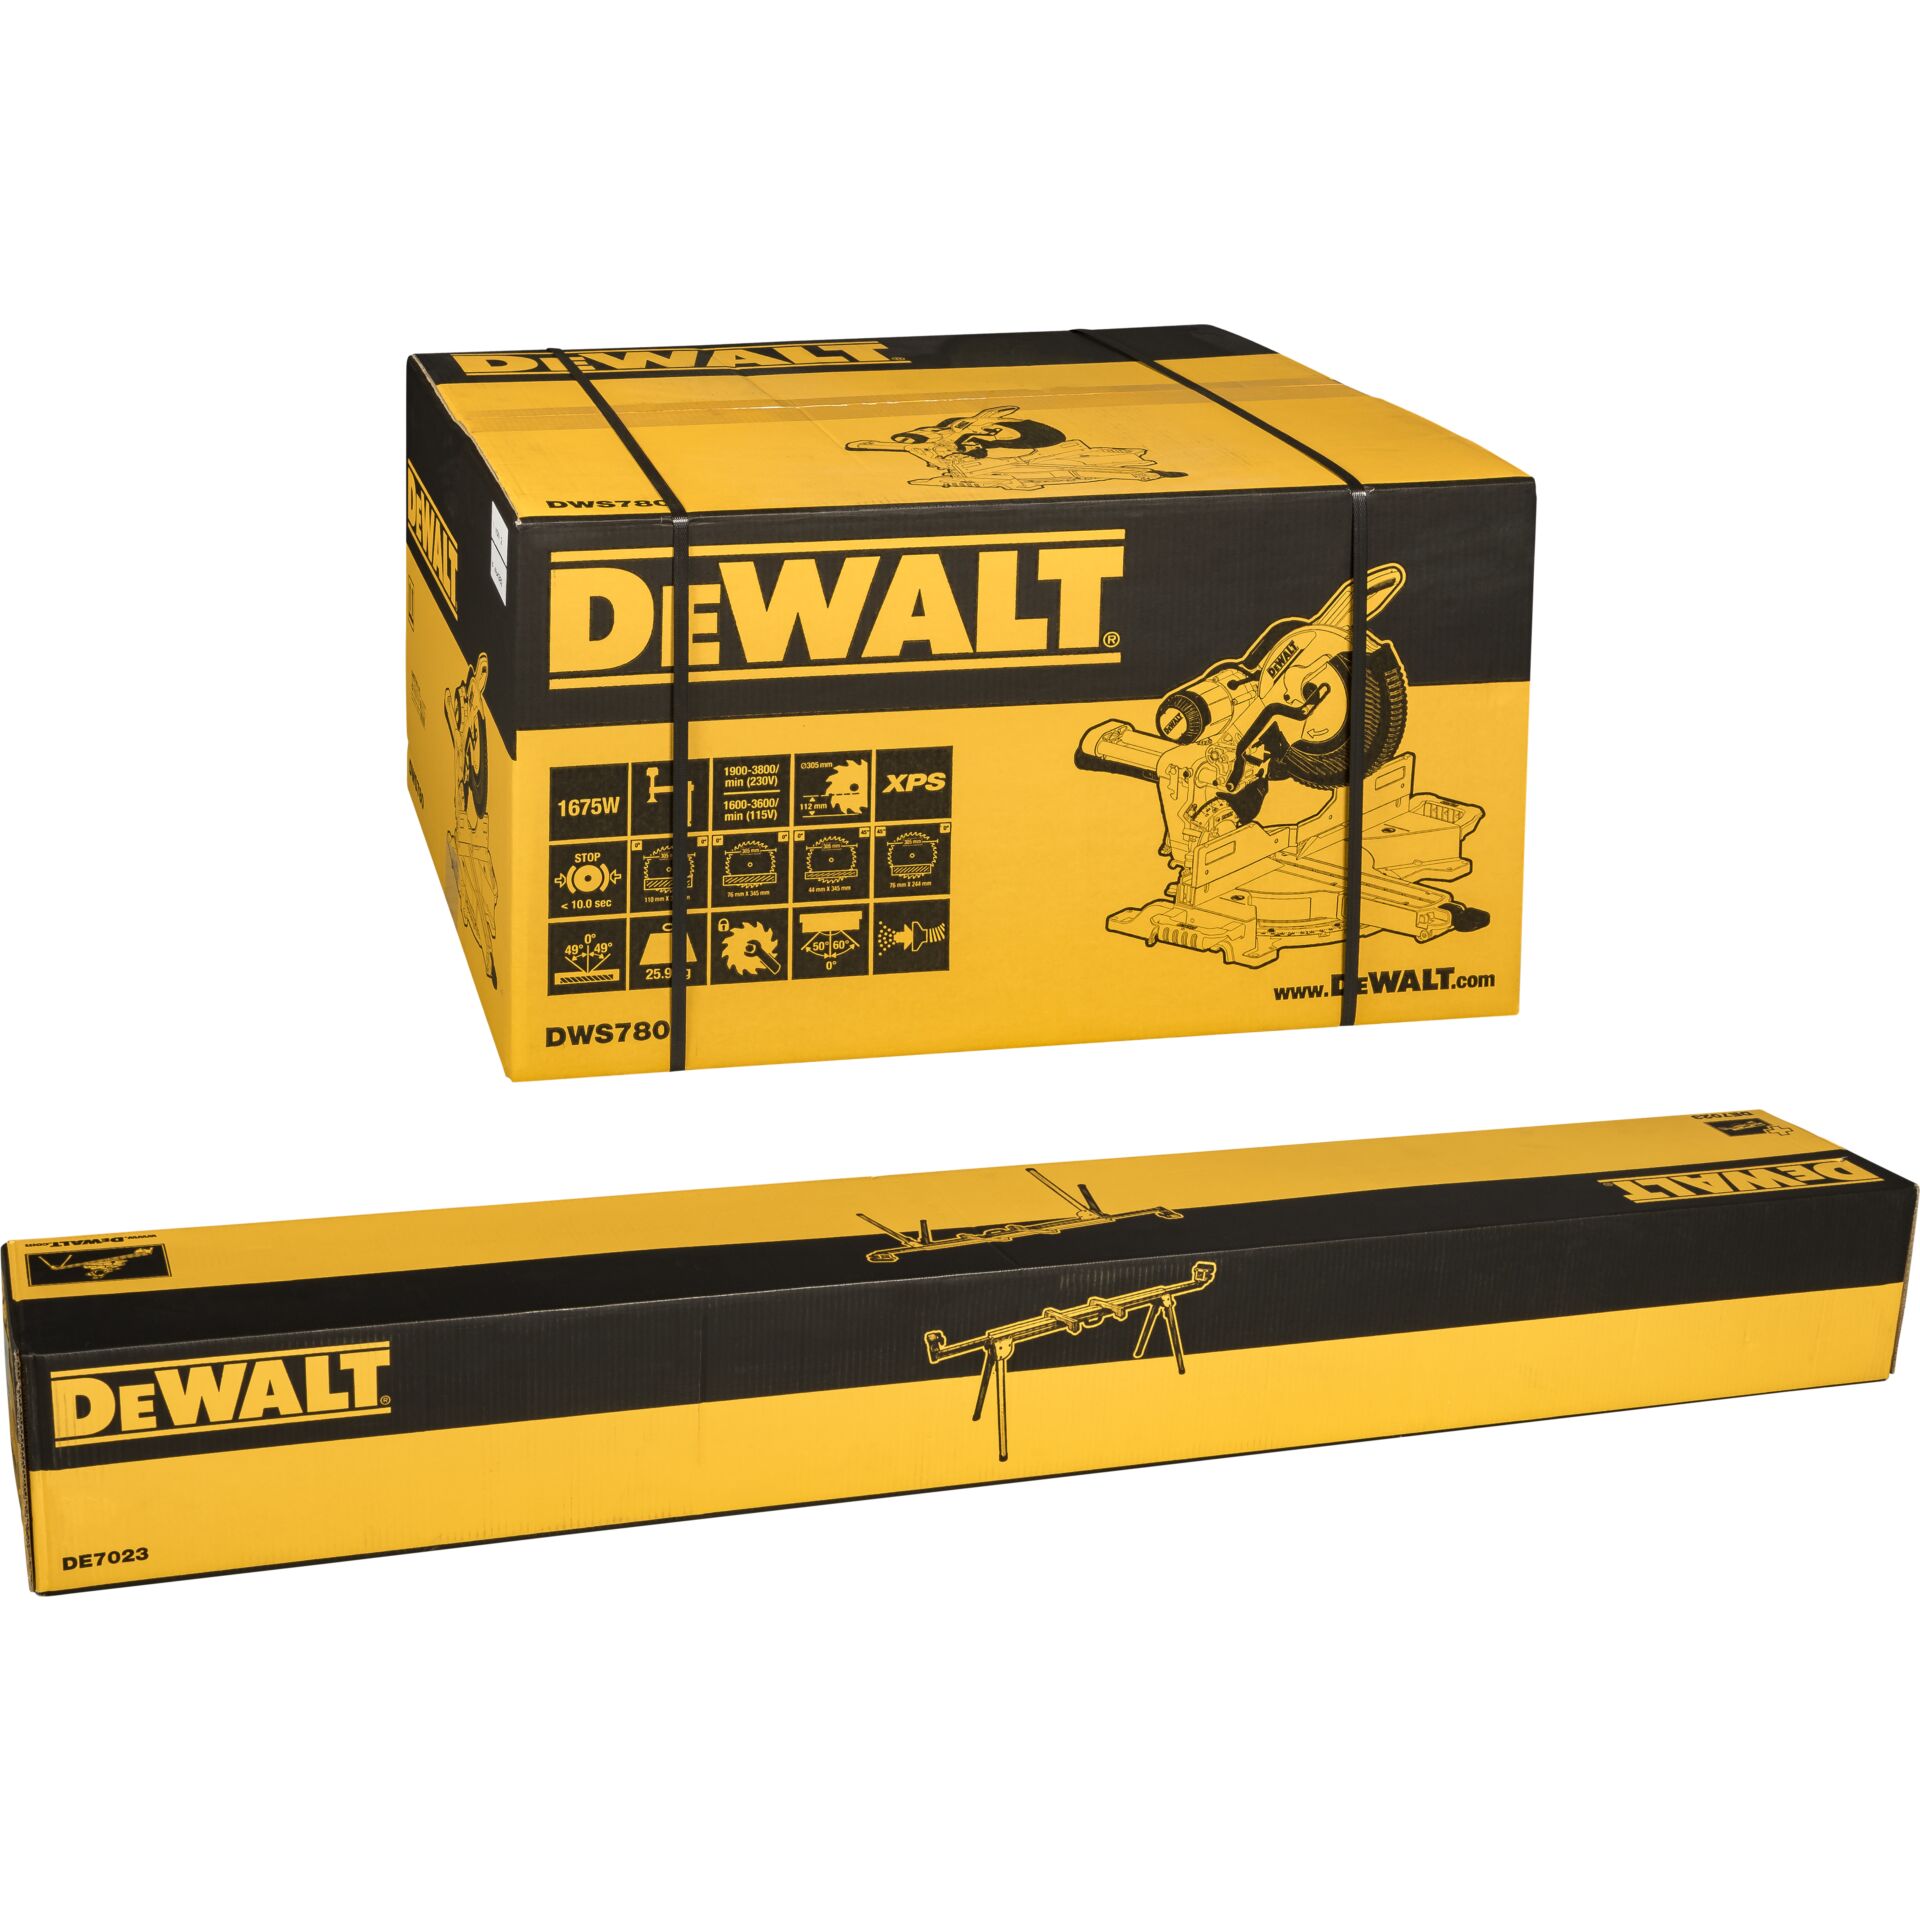 DeWALT DWS780KIT mitre saw 3800 RPM 1675 W